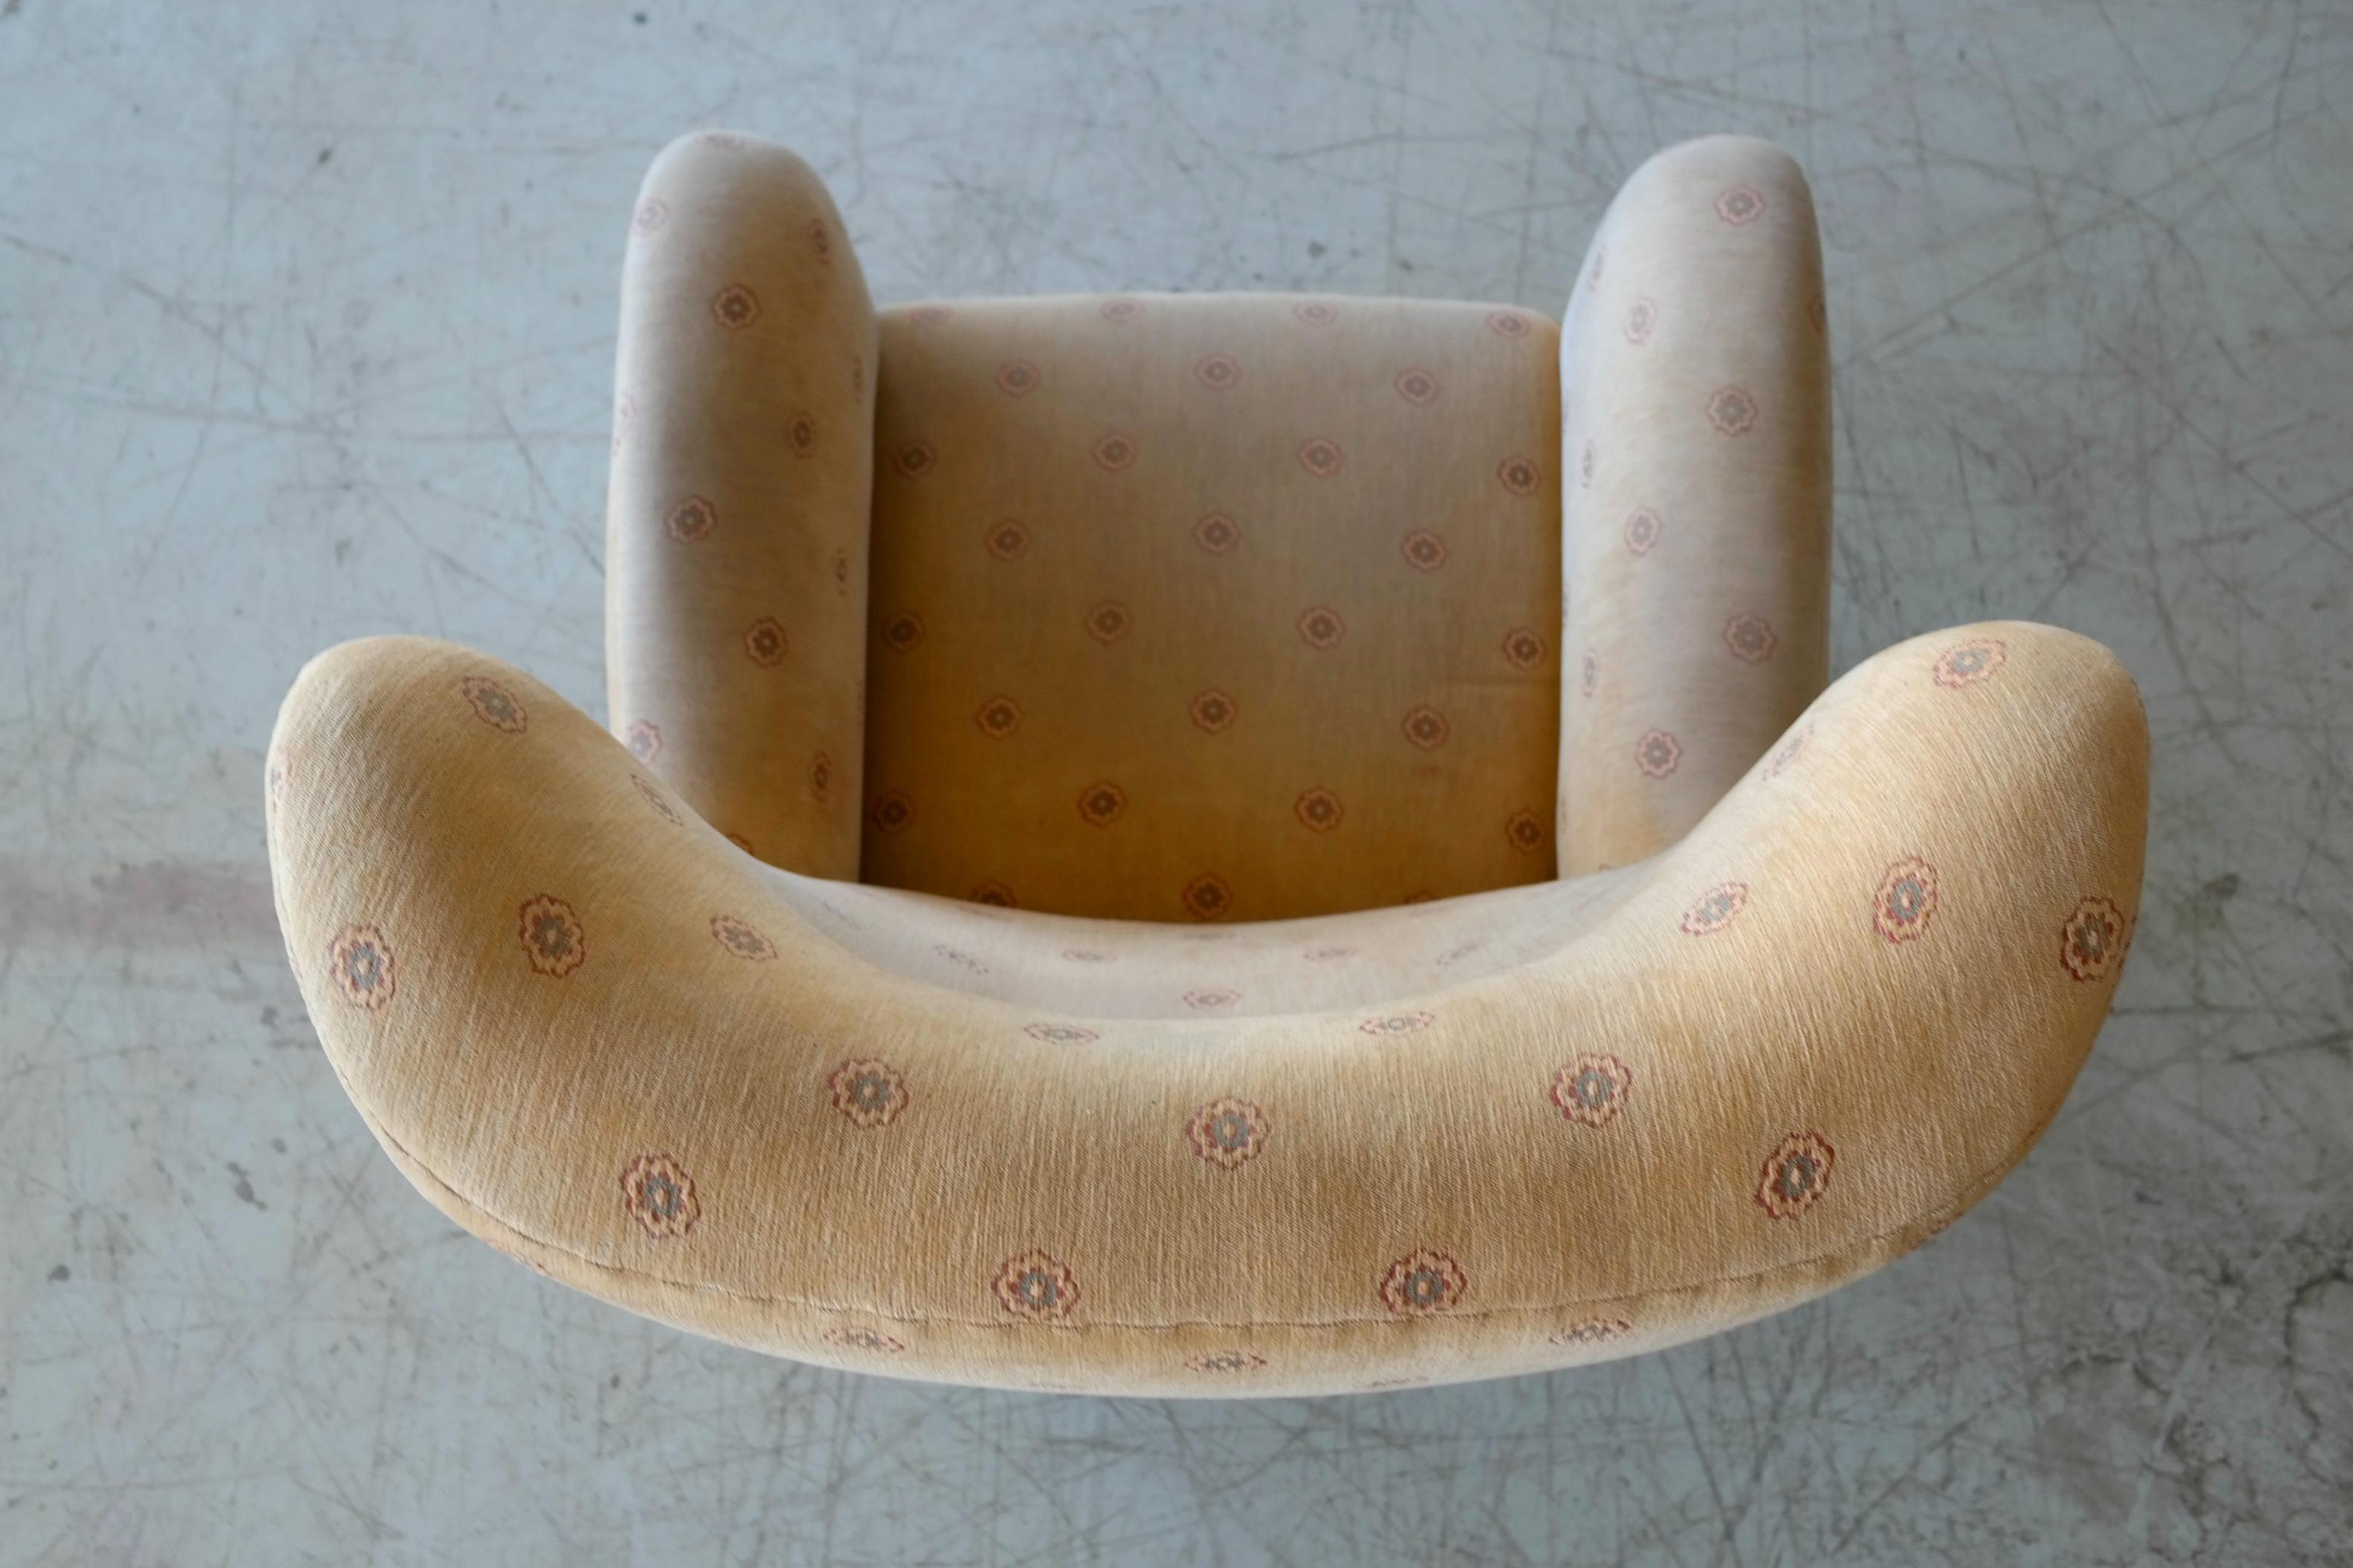 Beech Viggo Boesen Attributed High Back Lounge Chair Danish Midcentury